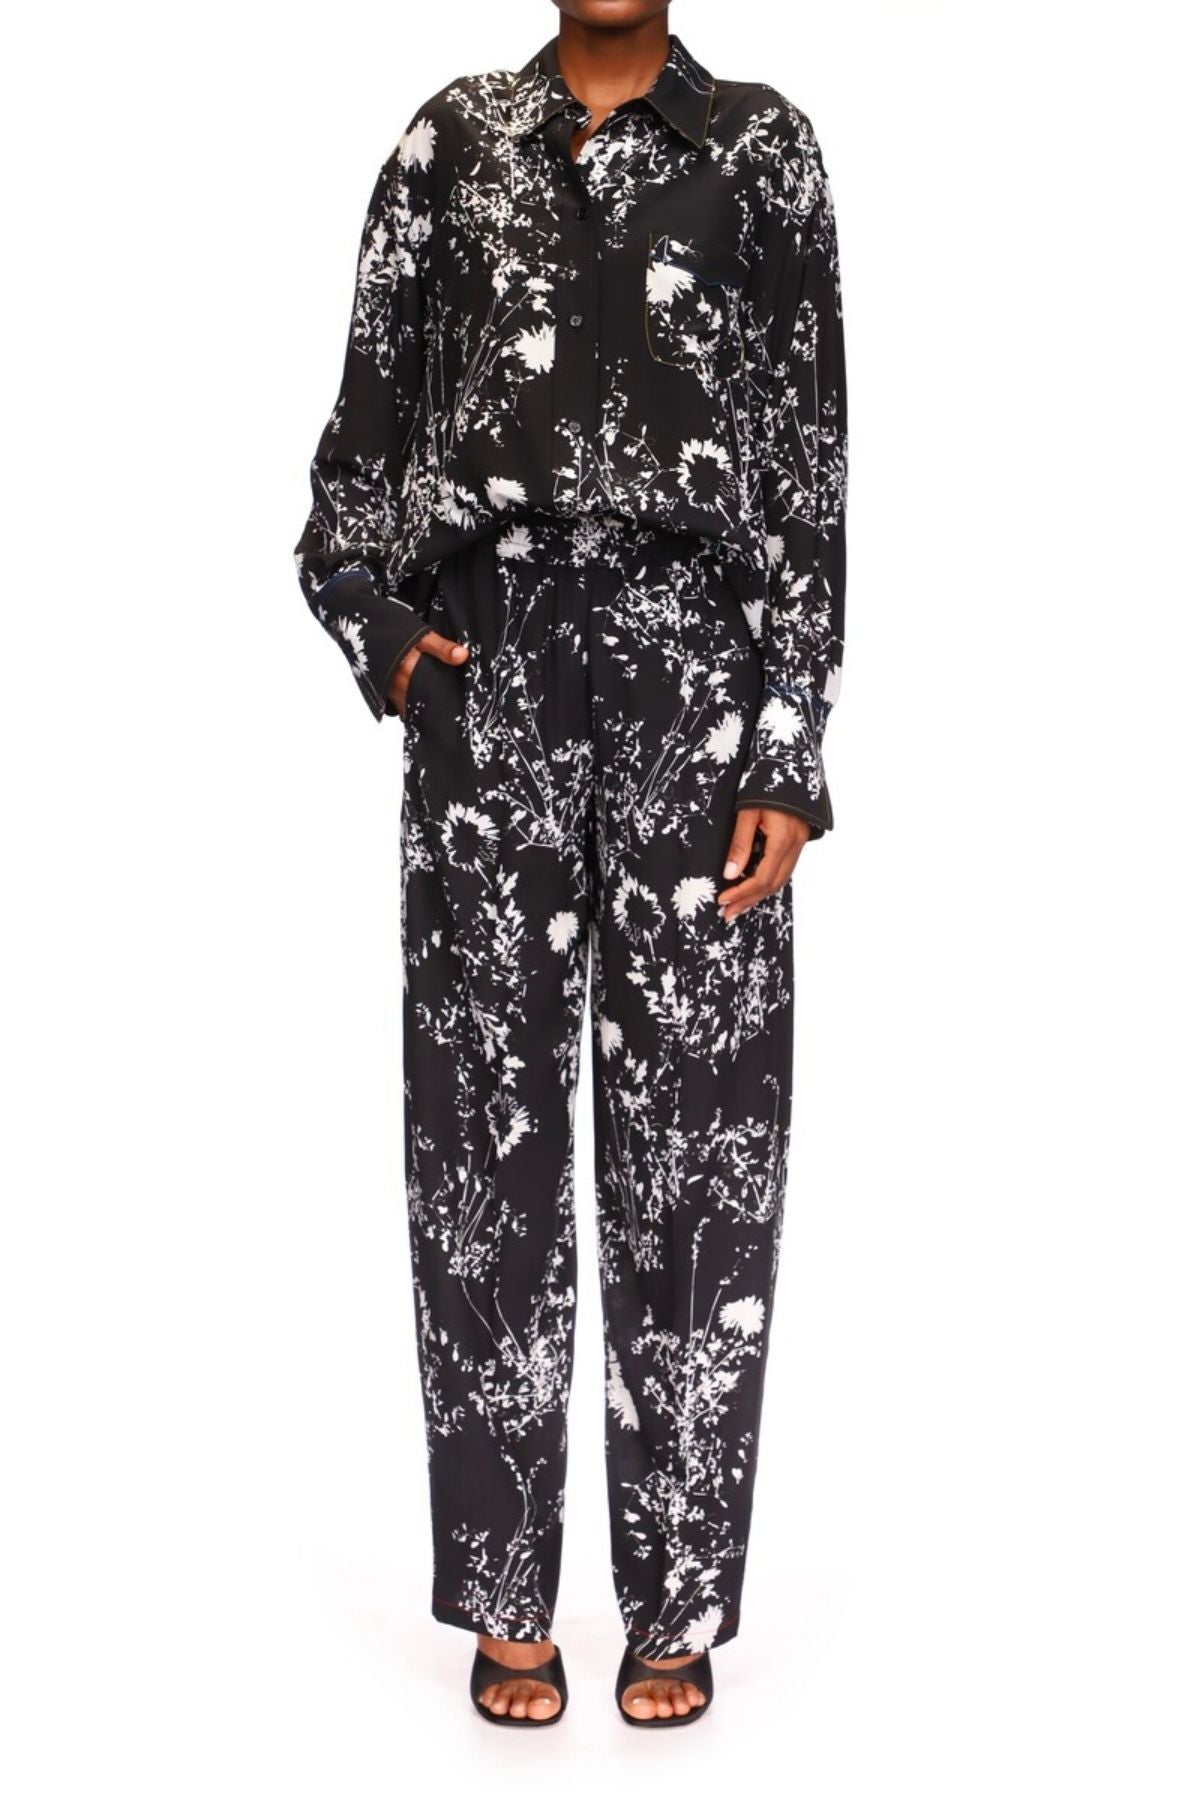 Victoria Beckham Pyjama Trouser - Floral Negative